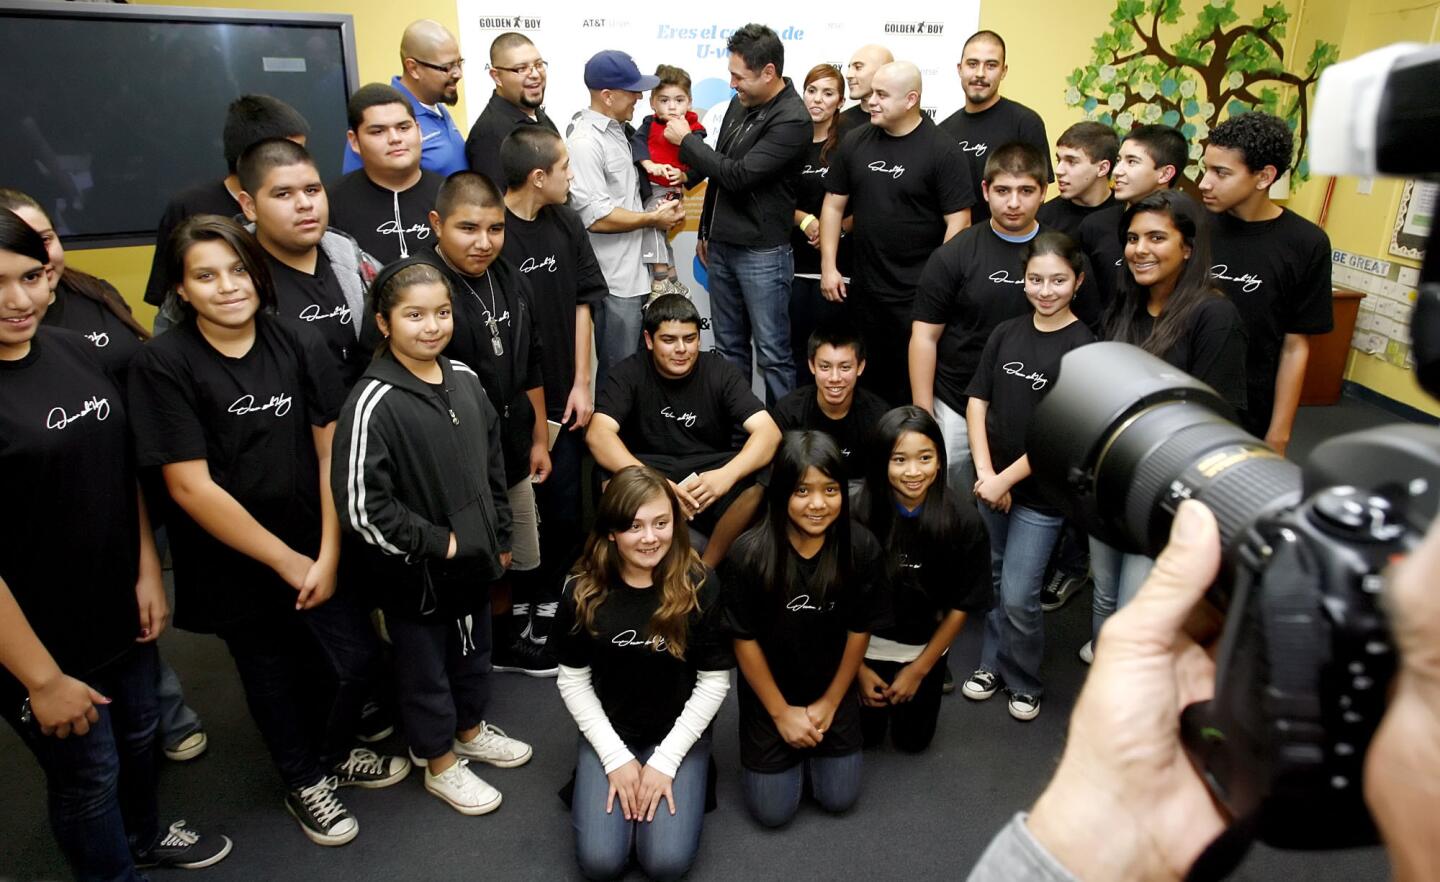 Photo Gallery: World Boxing Champ Oscar de la Hoya visits Burbank Boys & Girls Club